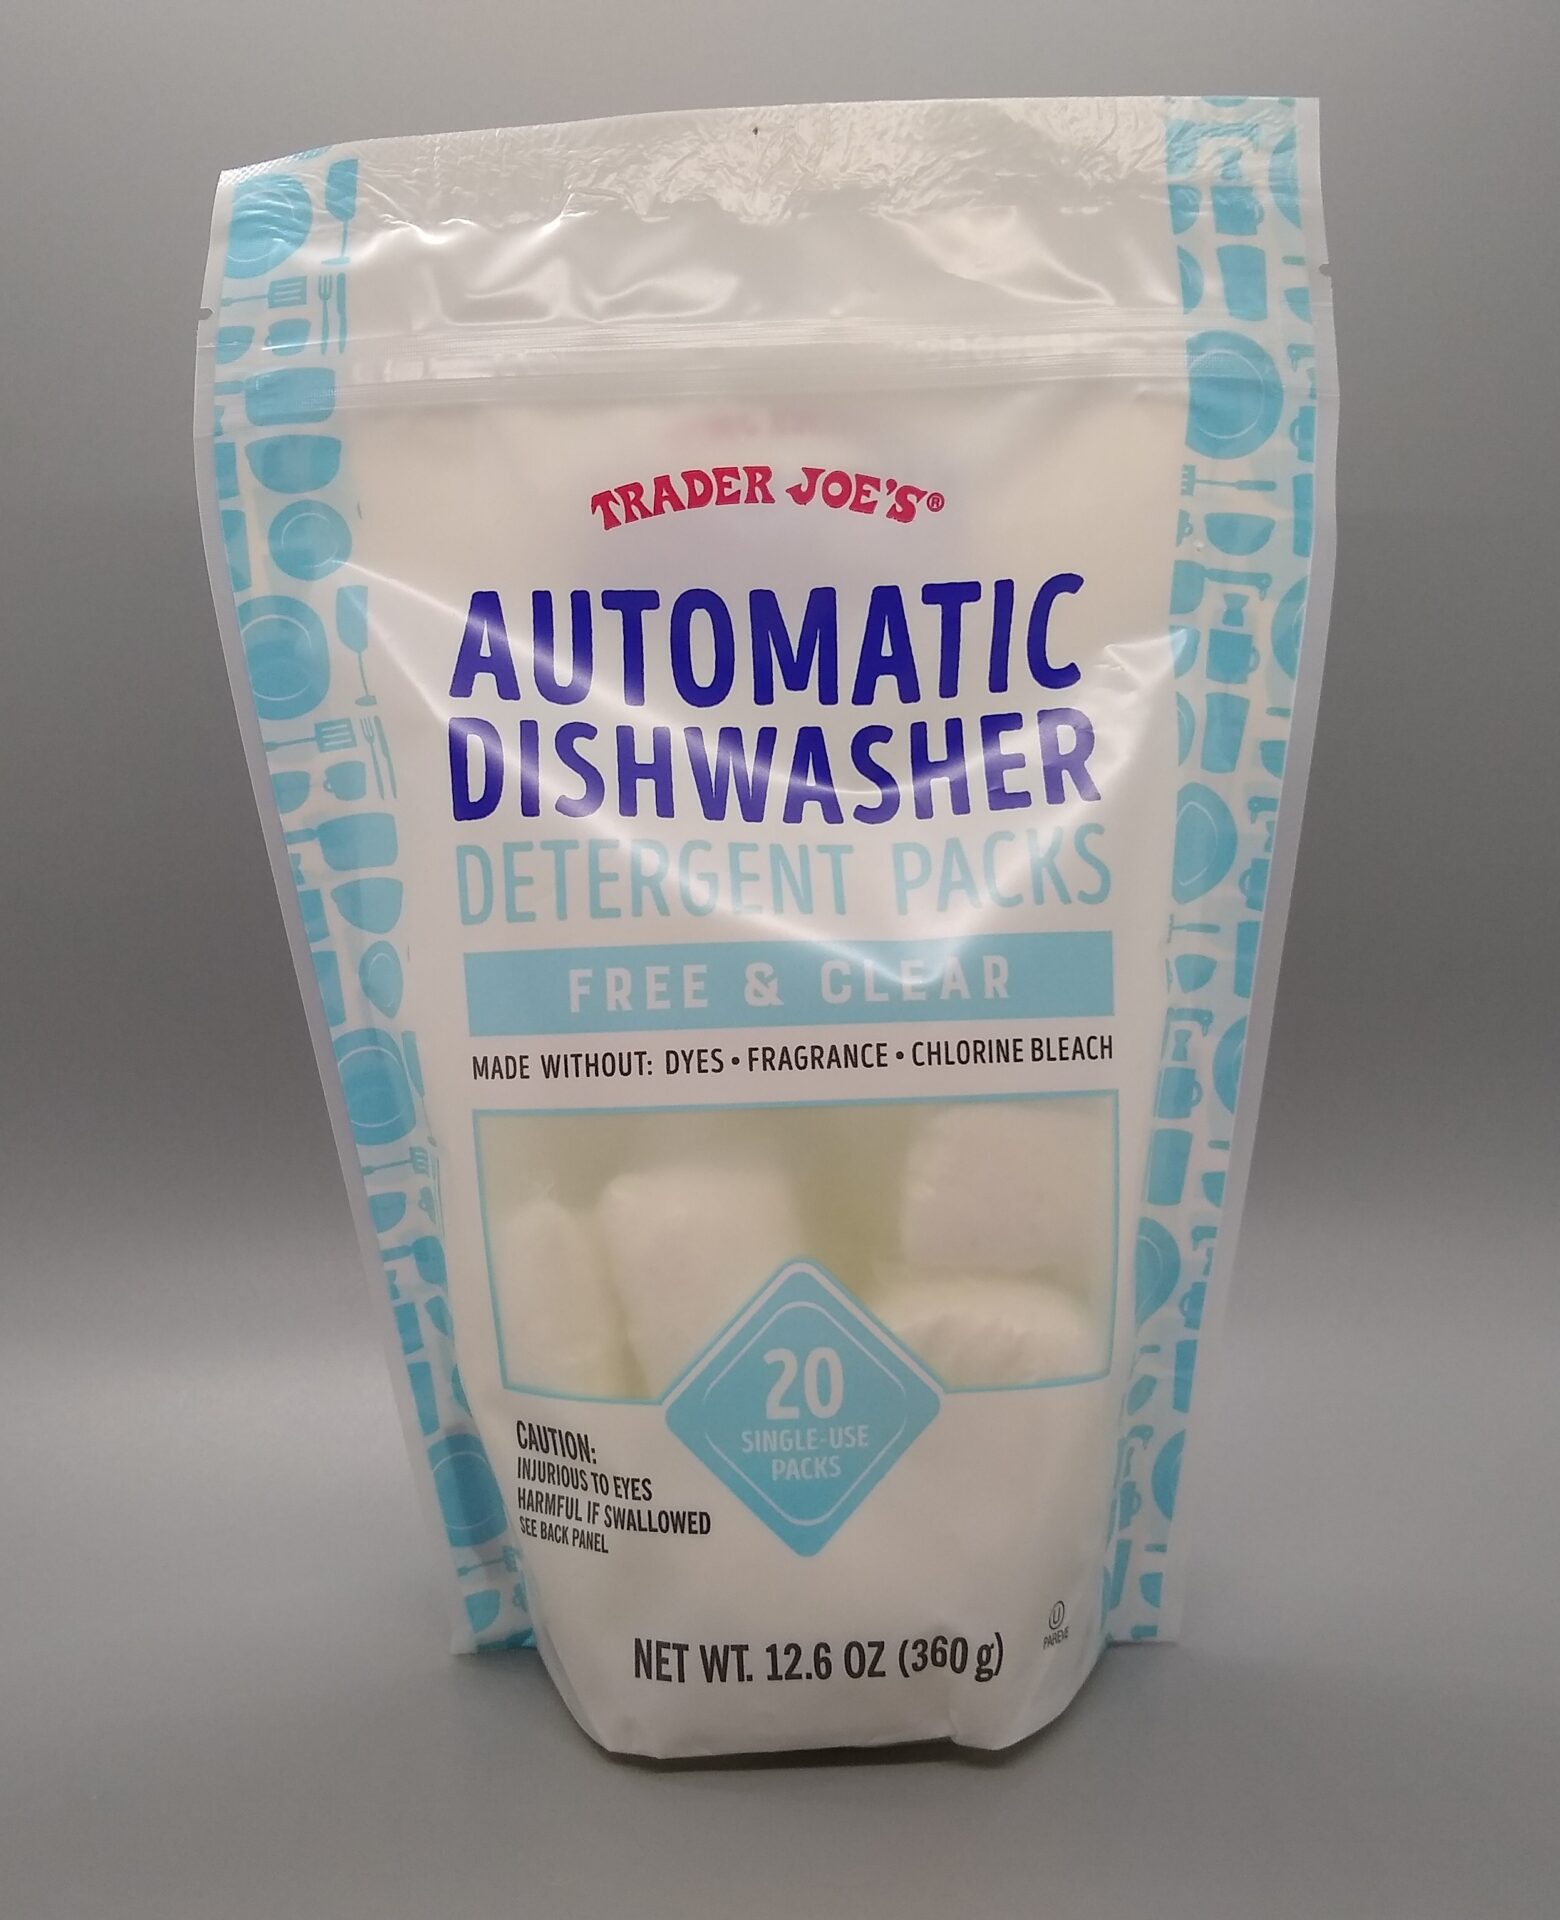 Trader Joe's Automatic Dishwasher Detergent Packs